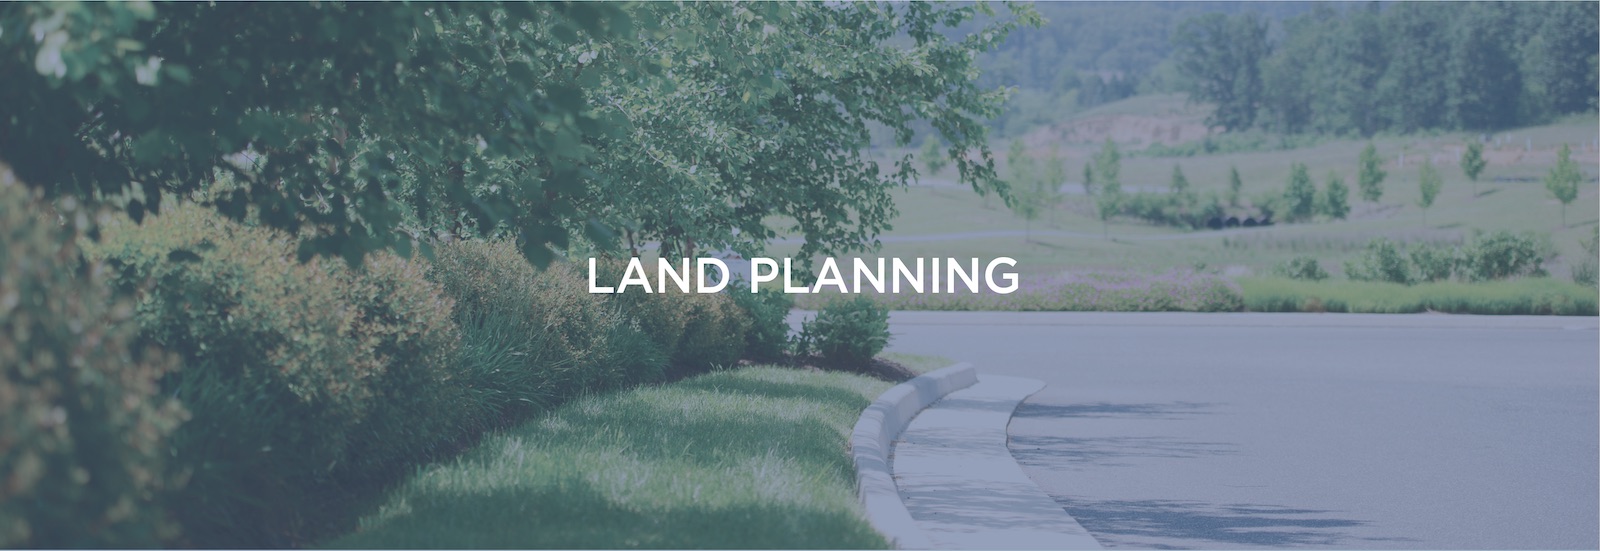 land planning